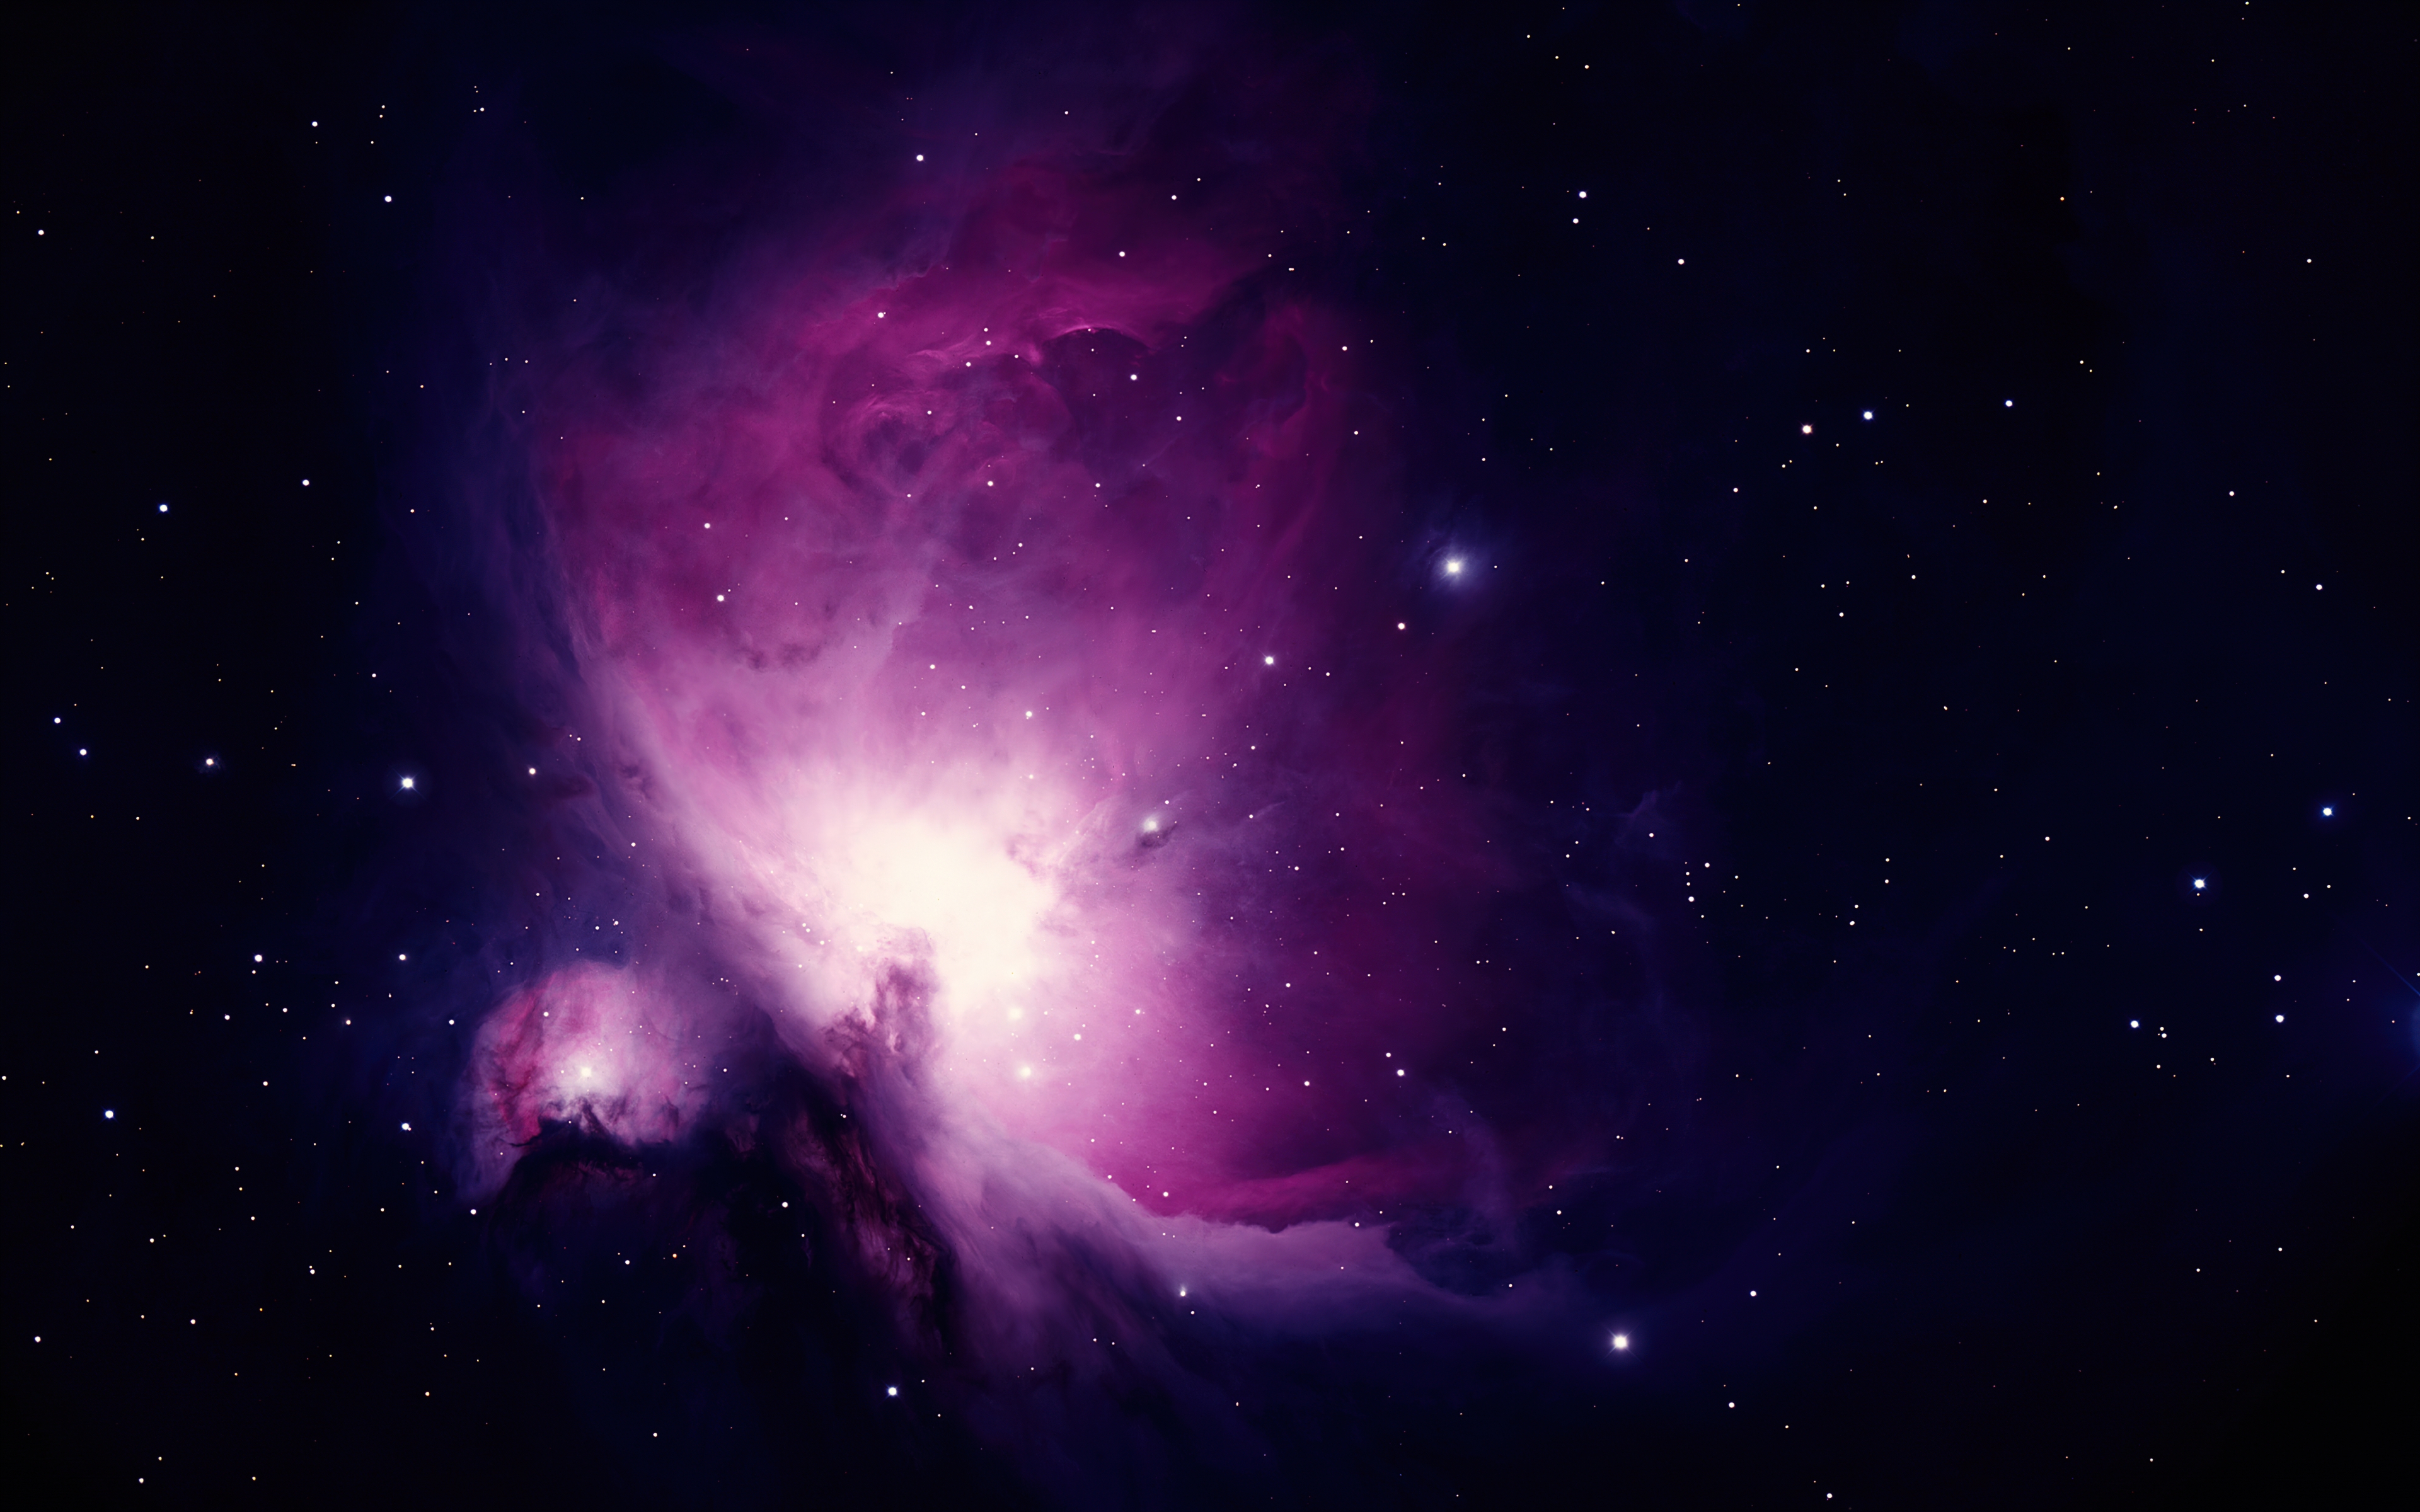 HD wallpaper, Astronomy, Nasa, Hubble Space Telescope, Orion Nebula, Constellation